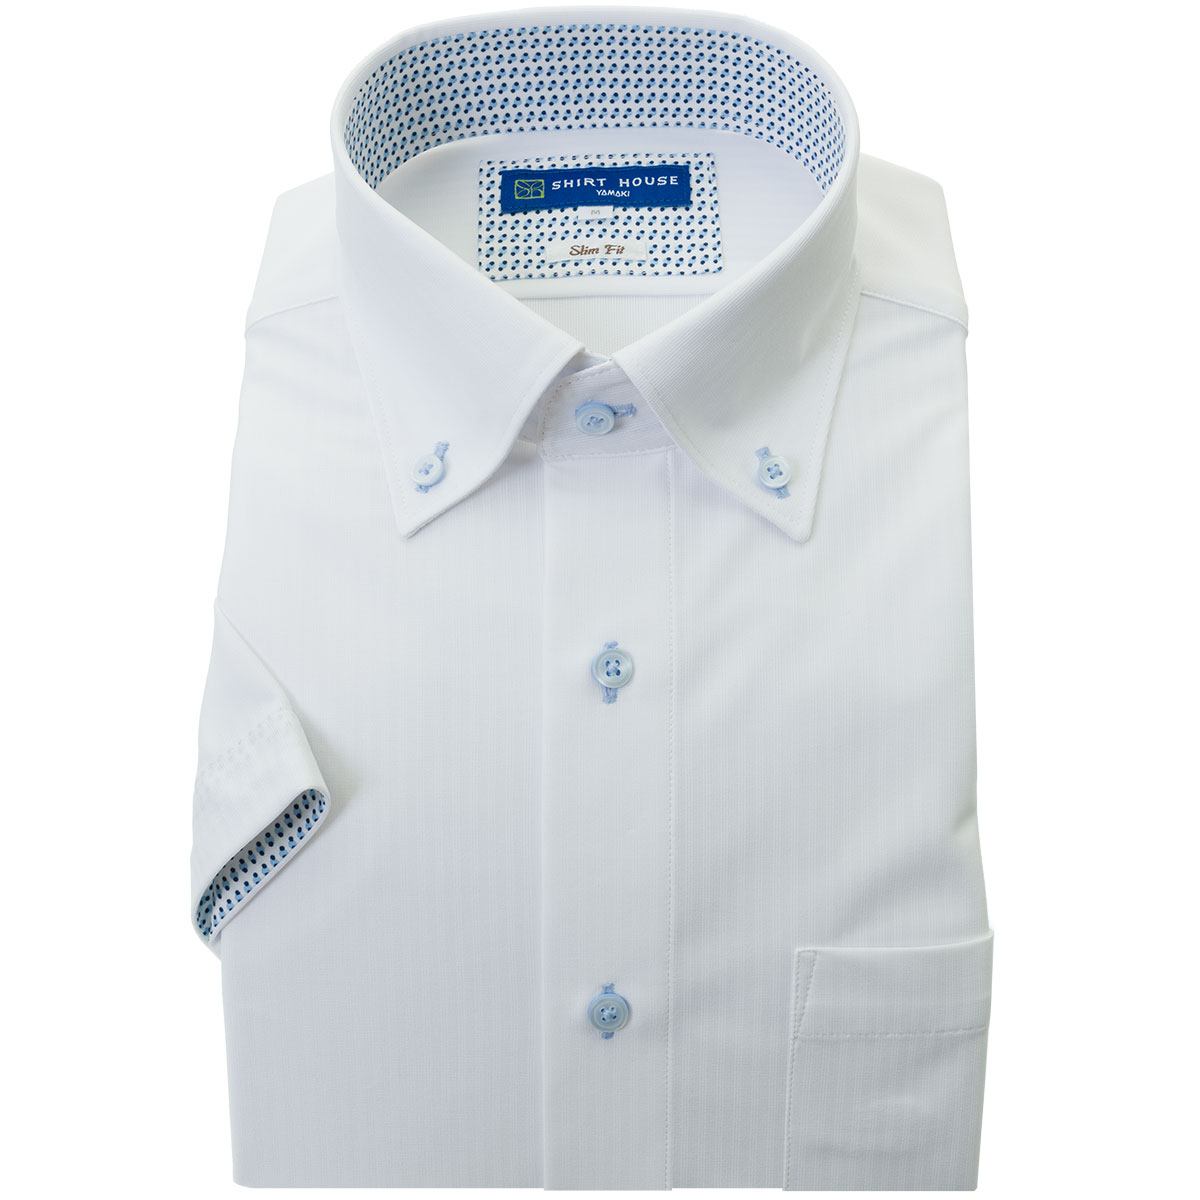 SHIRT HOUSE・ブルーレーベル 半袖スリムフィット ニットシャツ(裄詰不可)ボタンダウン ホワイト ワイシャツ